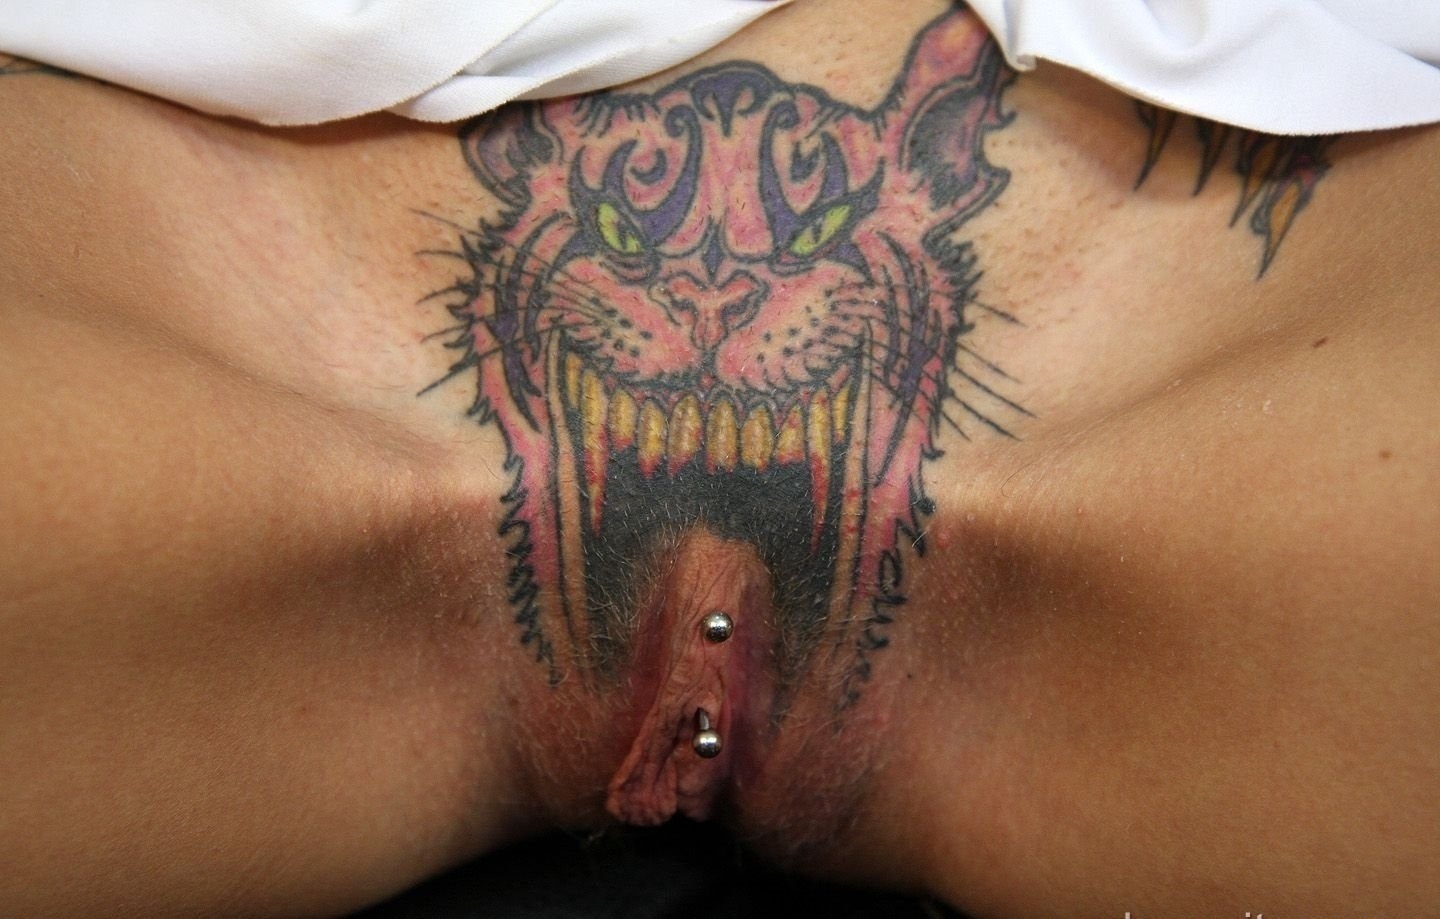 Tattooed Pussies